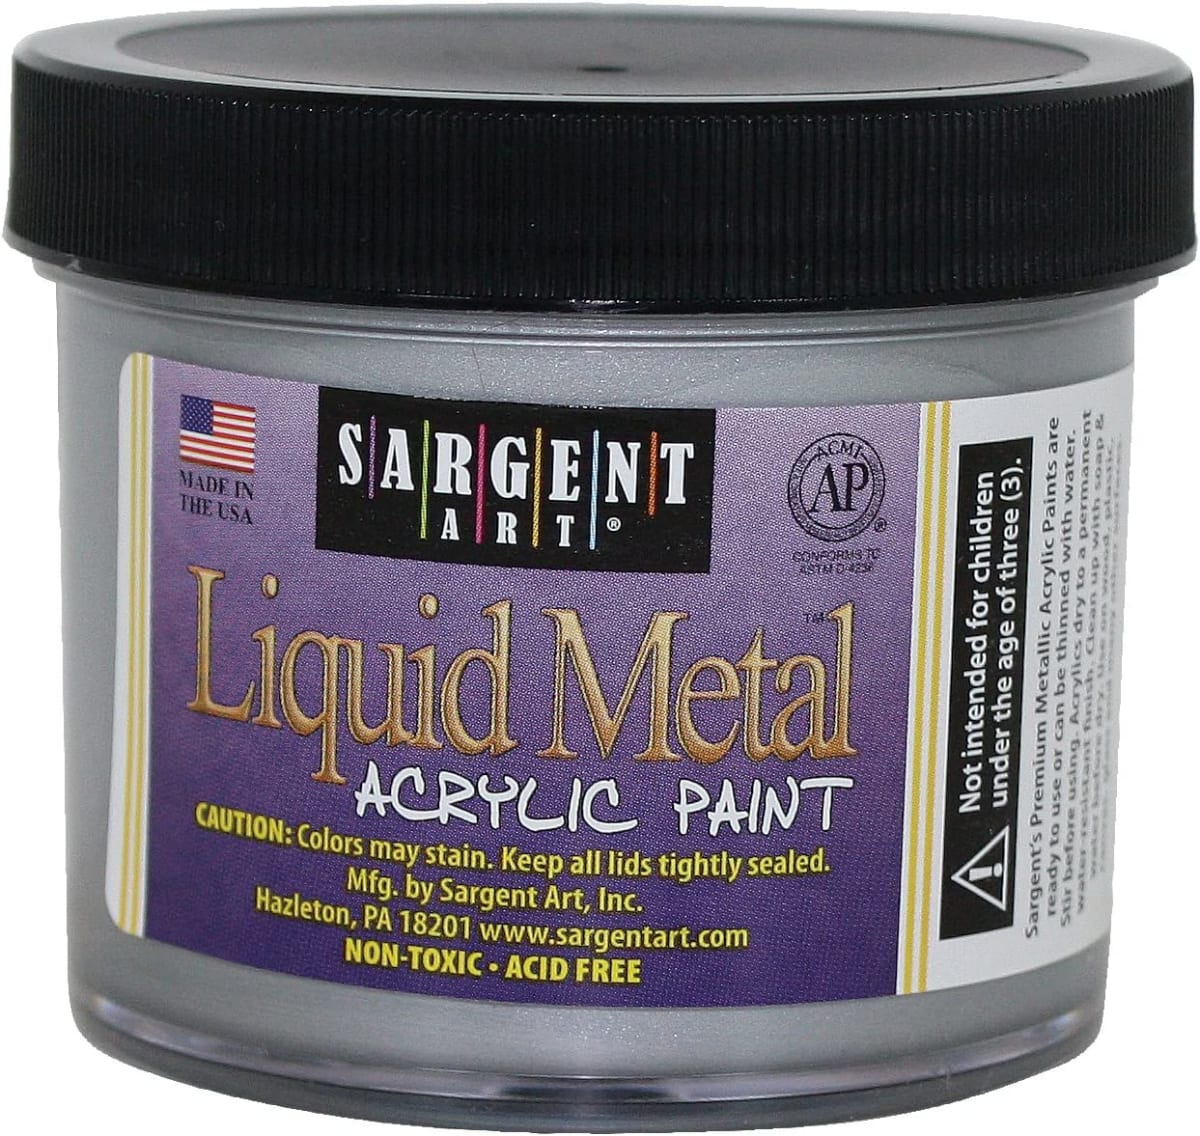 Sargent Art 4 Ounce Liquid Metal Acrylic Paint